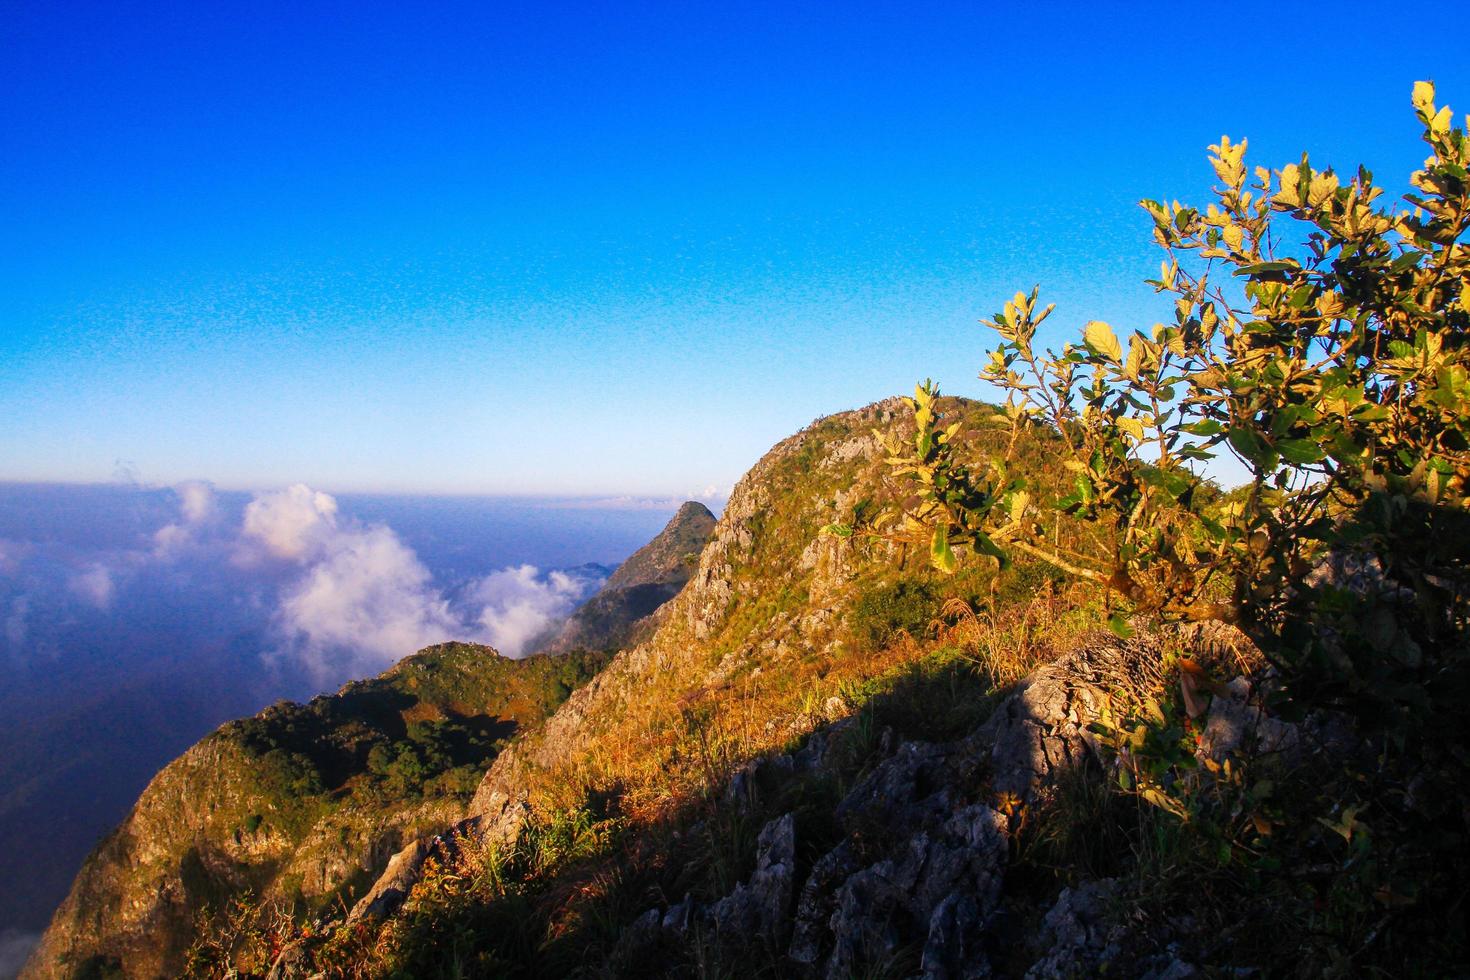 zonsopkomst in ochtend- met lucht en wolk Aan de berg. zonnestraal met mist en de nevel Hoes de oerwoud heuvel in Thailand foto